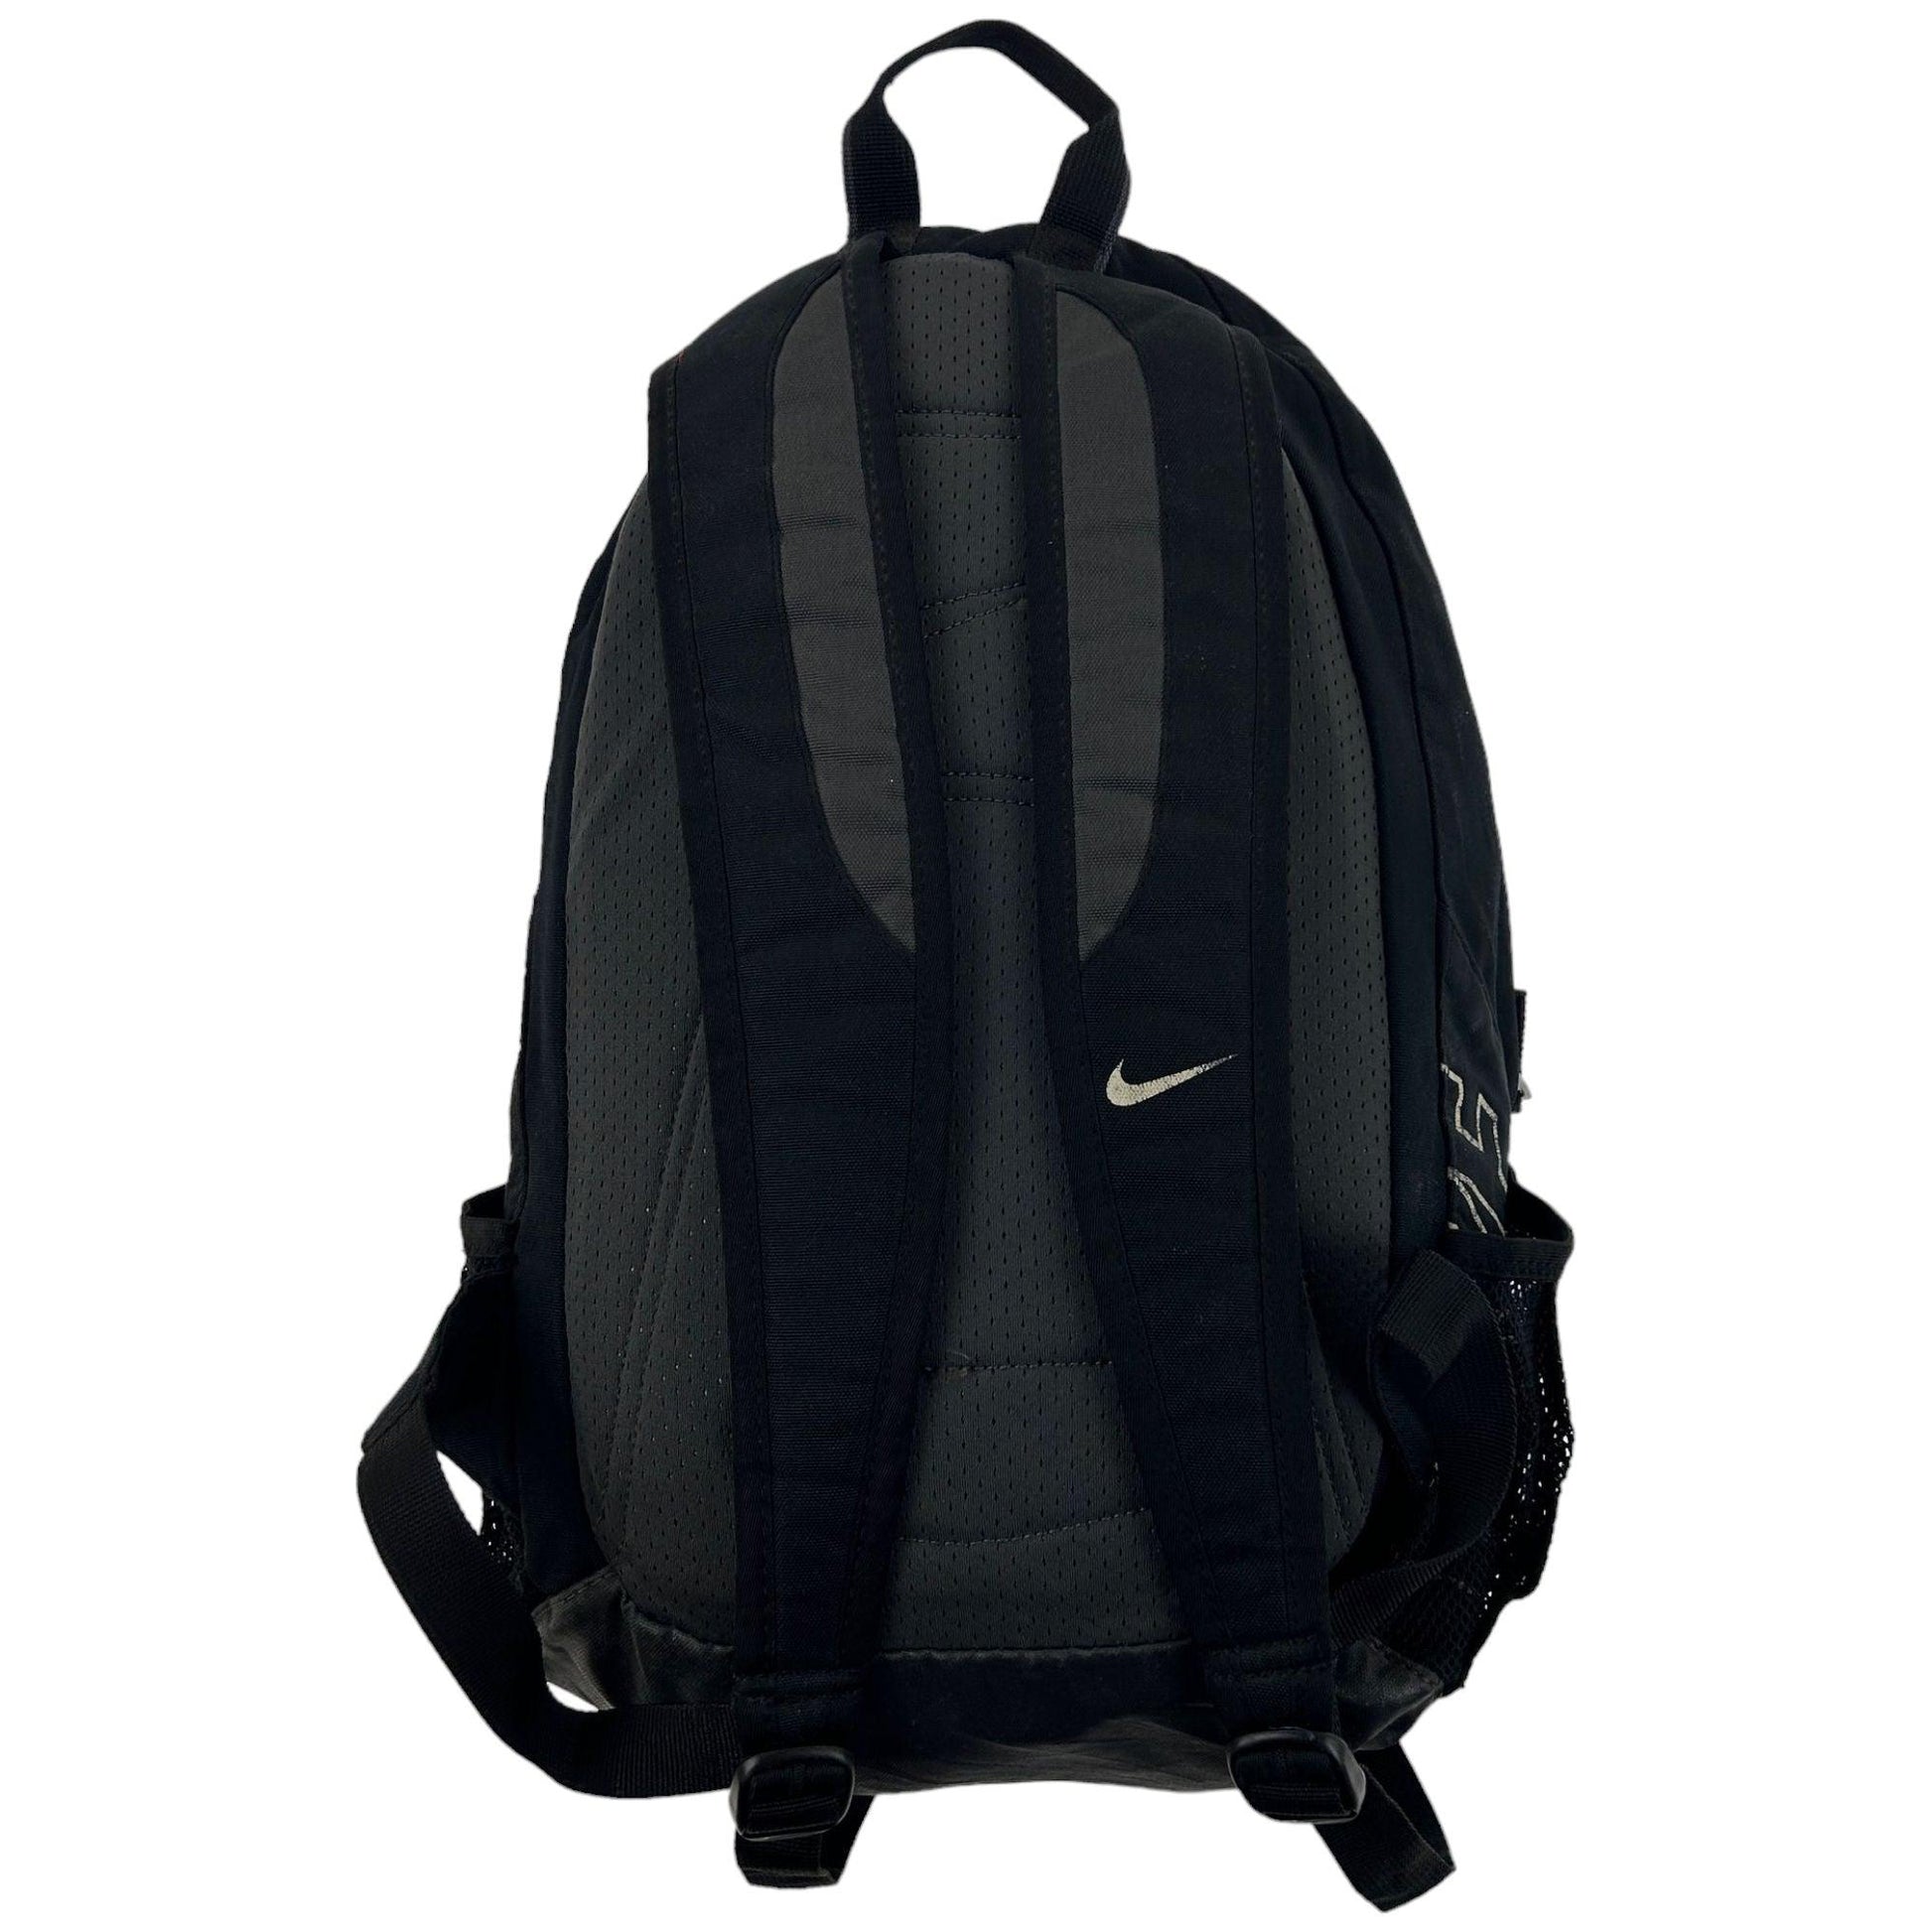 Vintage Nike Backpack - Known Source